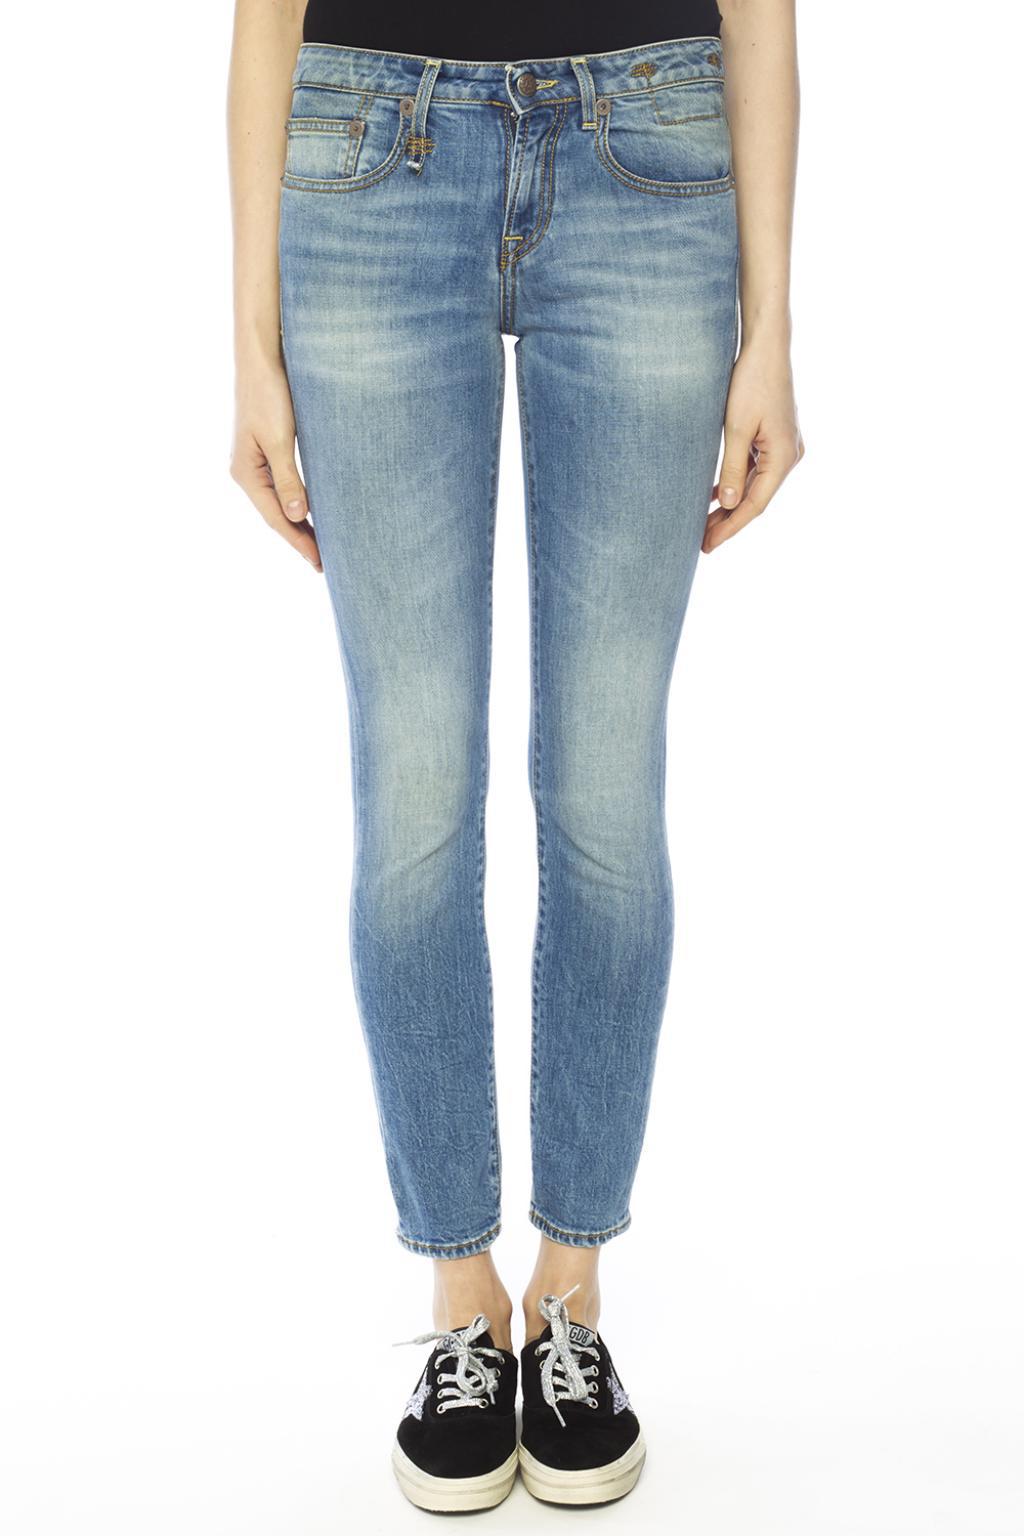 R13 Denim 'alison' Skinny Jeans in Blue - Lyst